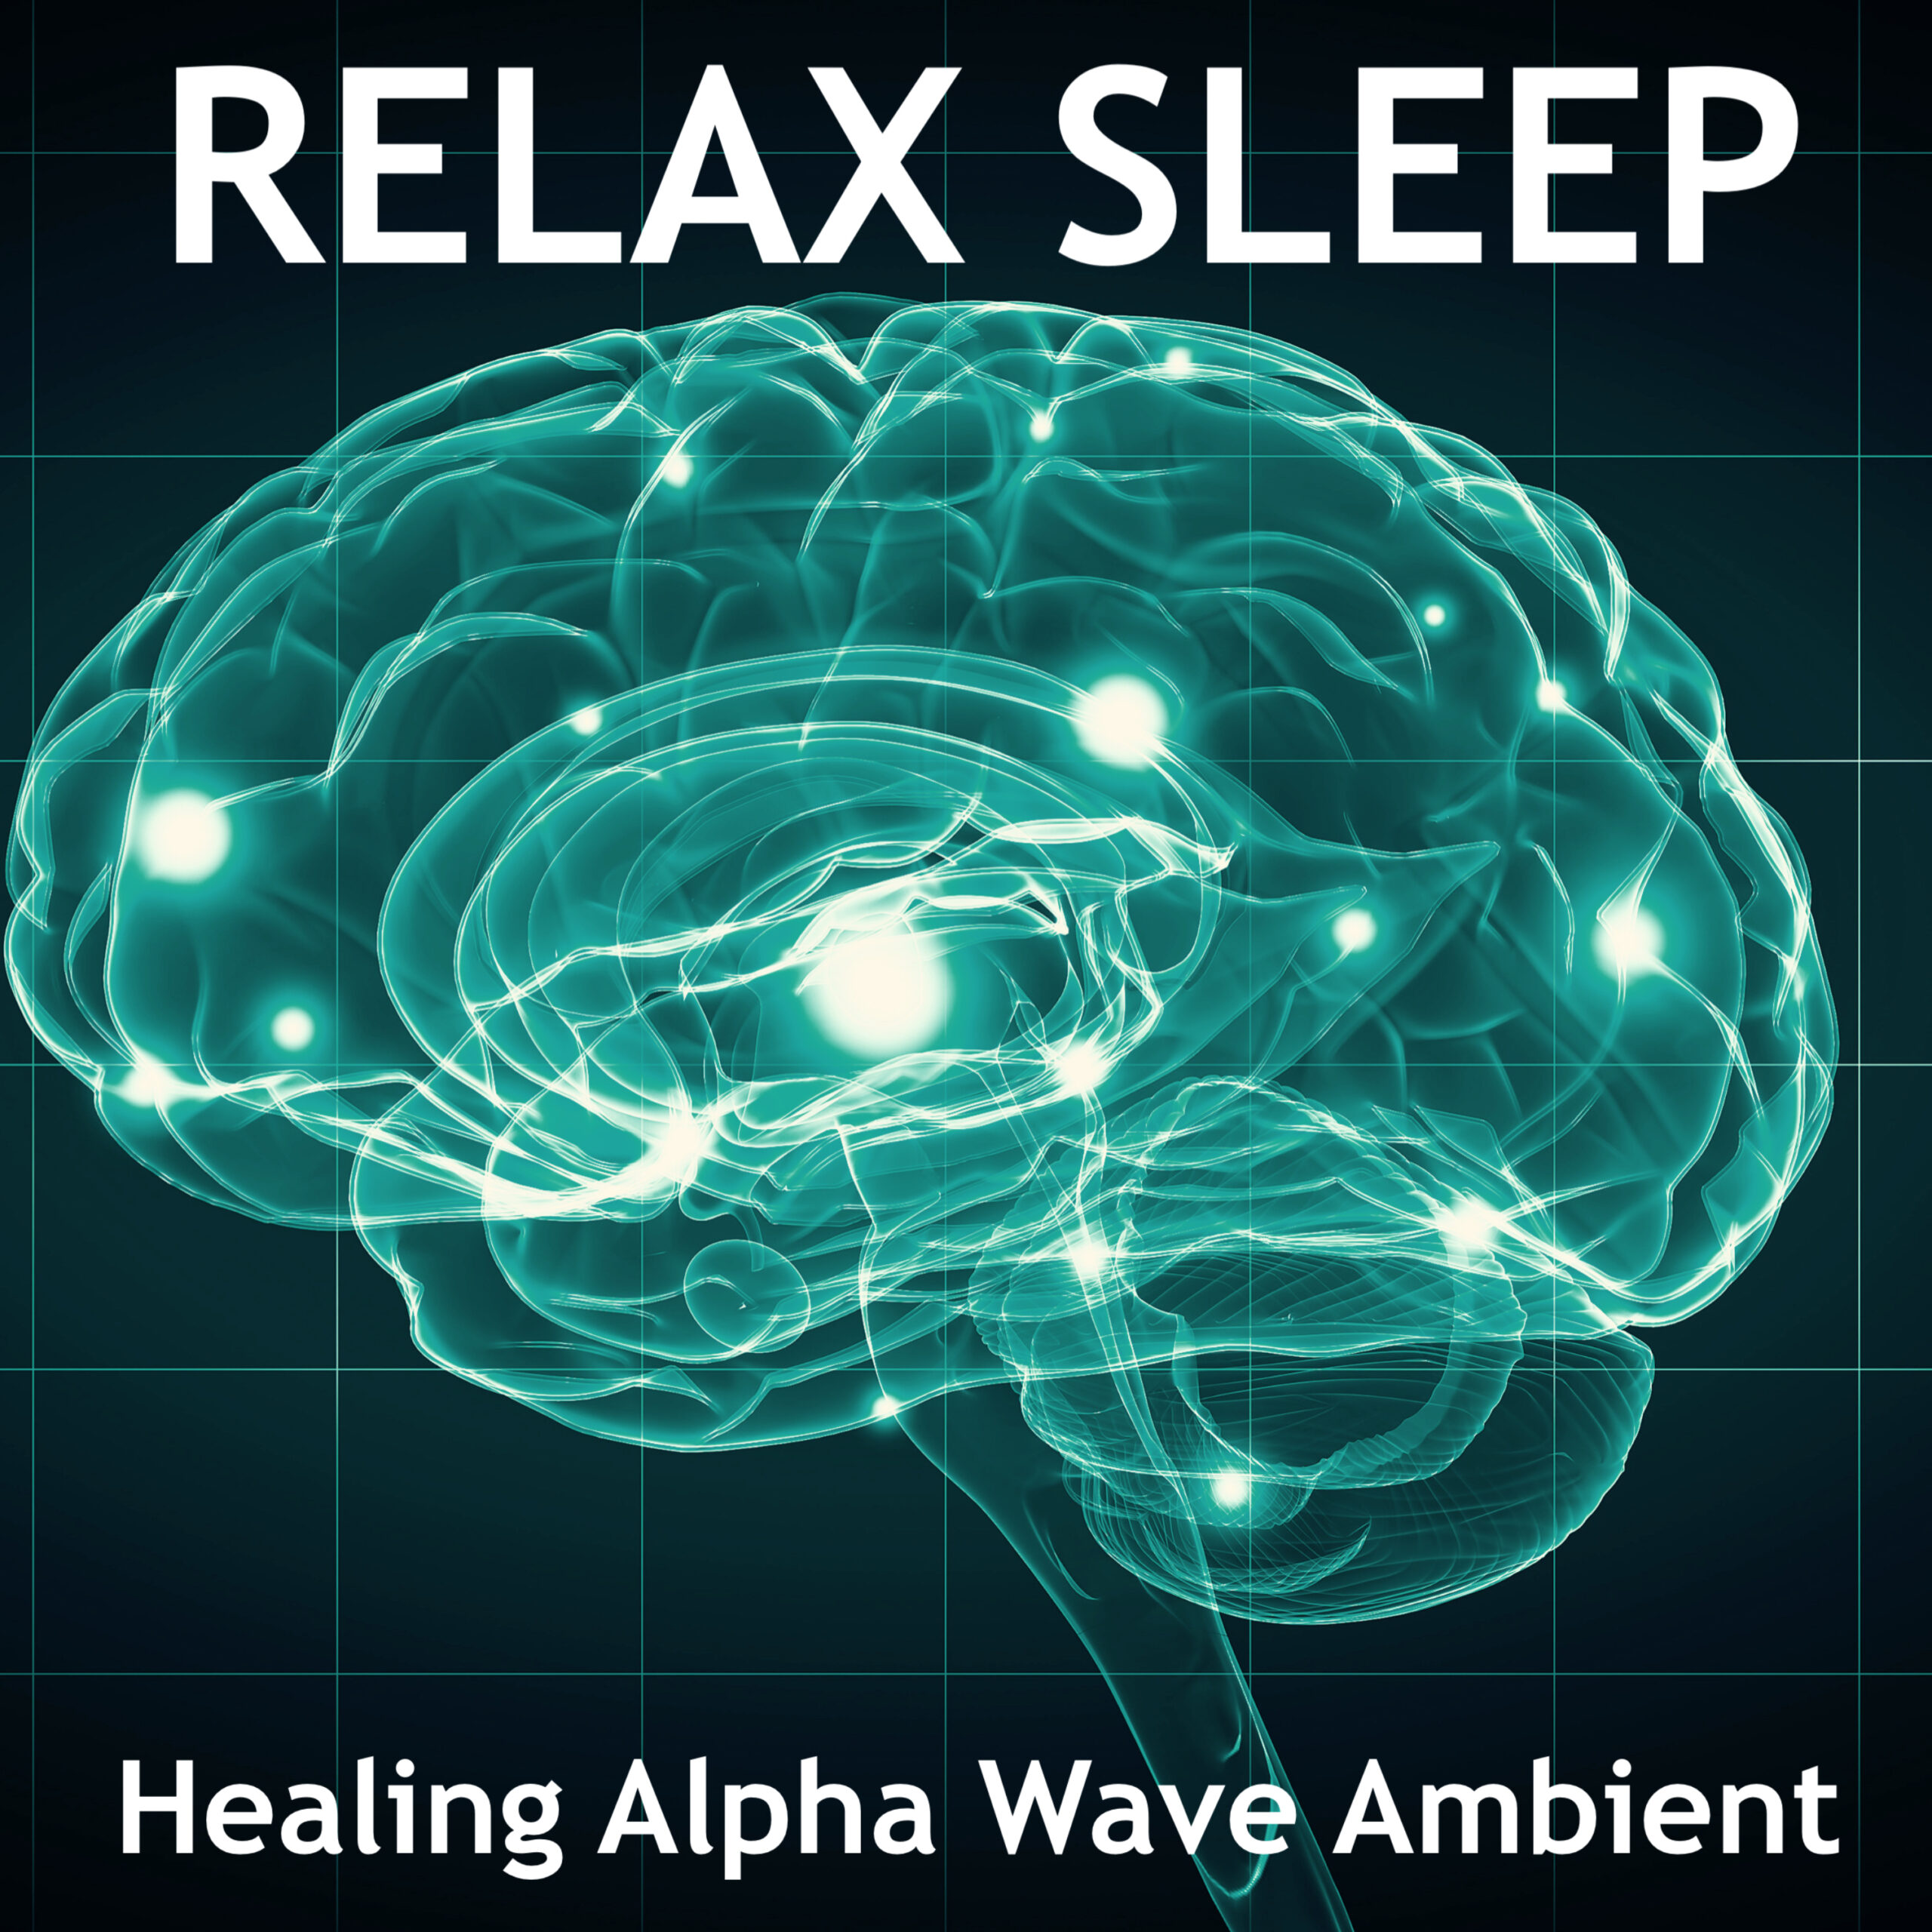 RELAX SLEEP Healing Alpha Wave Ambient